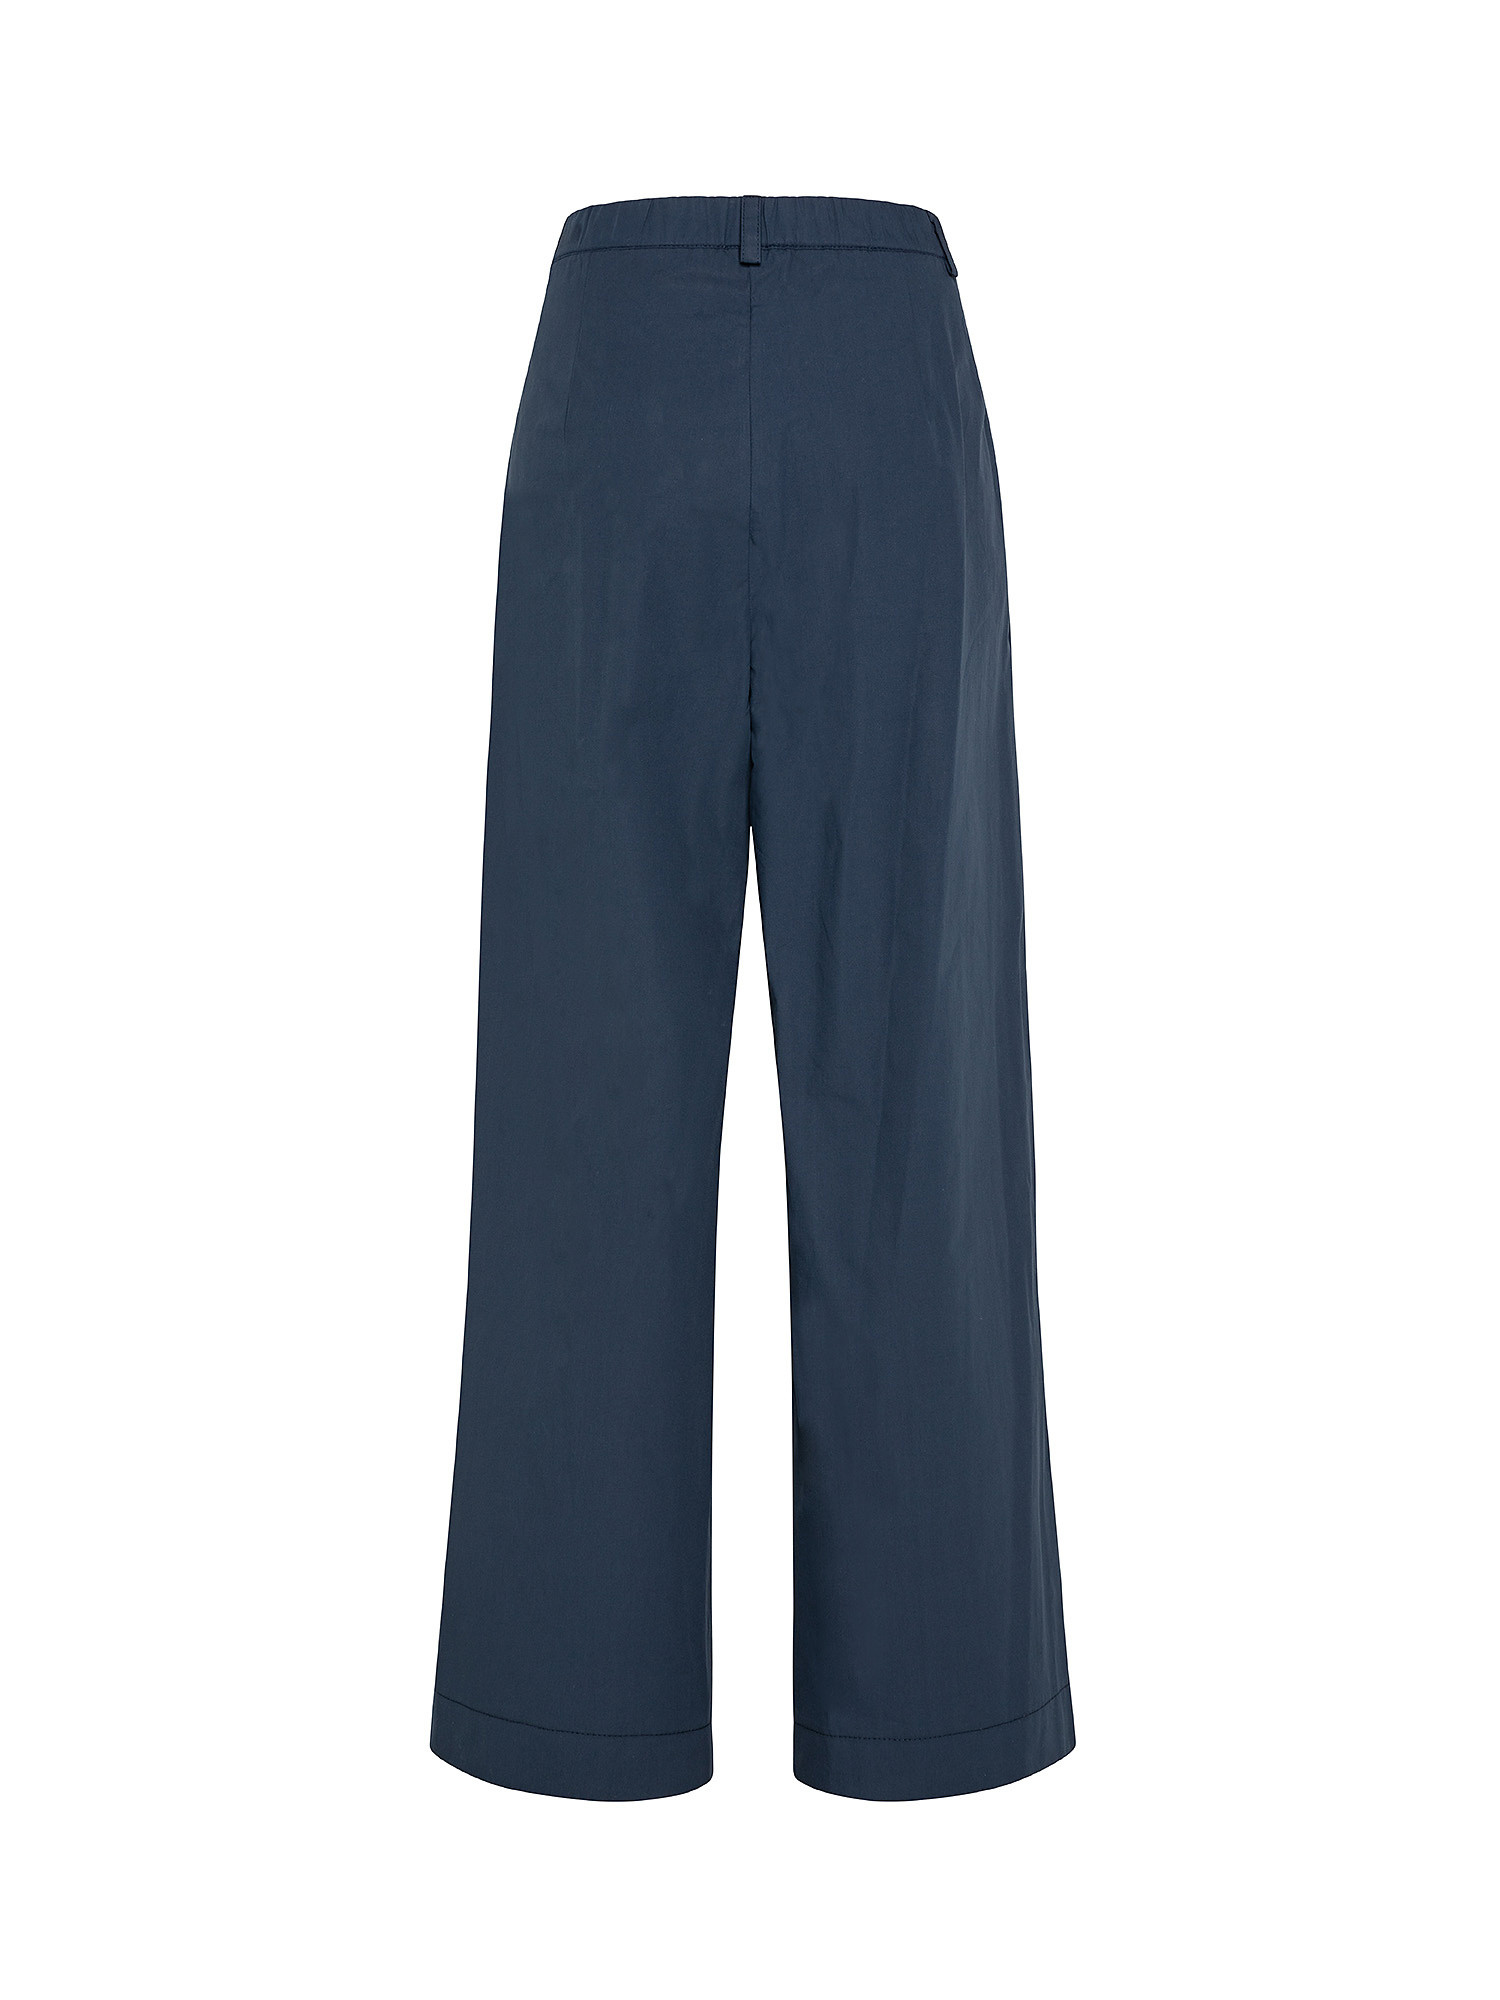 Pantaloni larghi, Blu, large image number 1